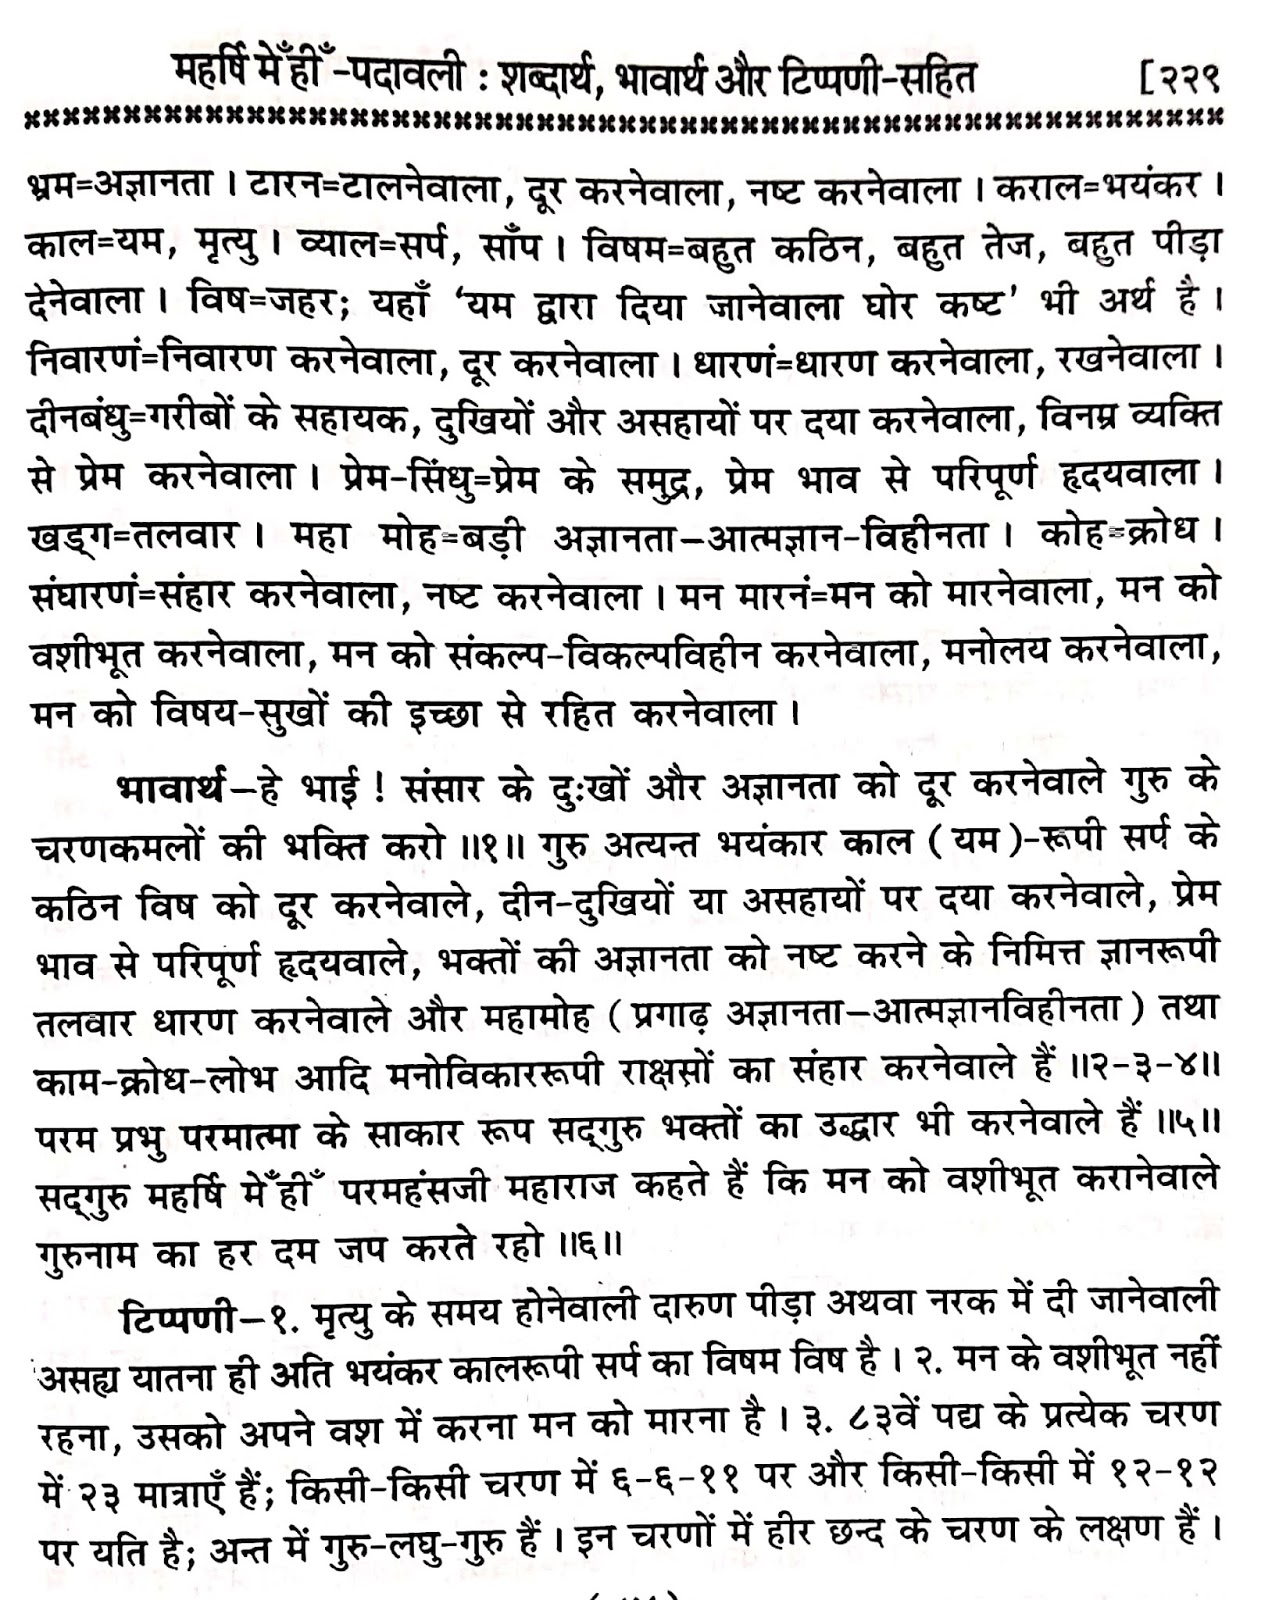 P83, Bhajan of Karuna Sindhu Gurudev "भजो हो गुरु चरण कमल,...." महर्षि मेंहीं पदावली अर्थ सहित। पदावली भजन 83 का शब्दार्थ, भावार्थ और टिप्पणी।